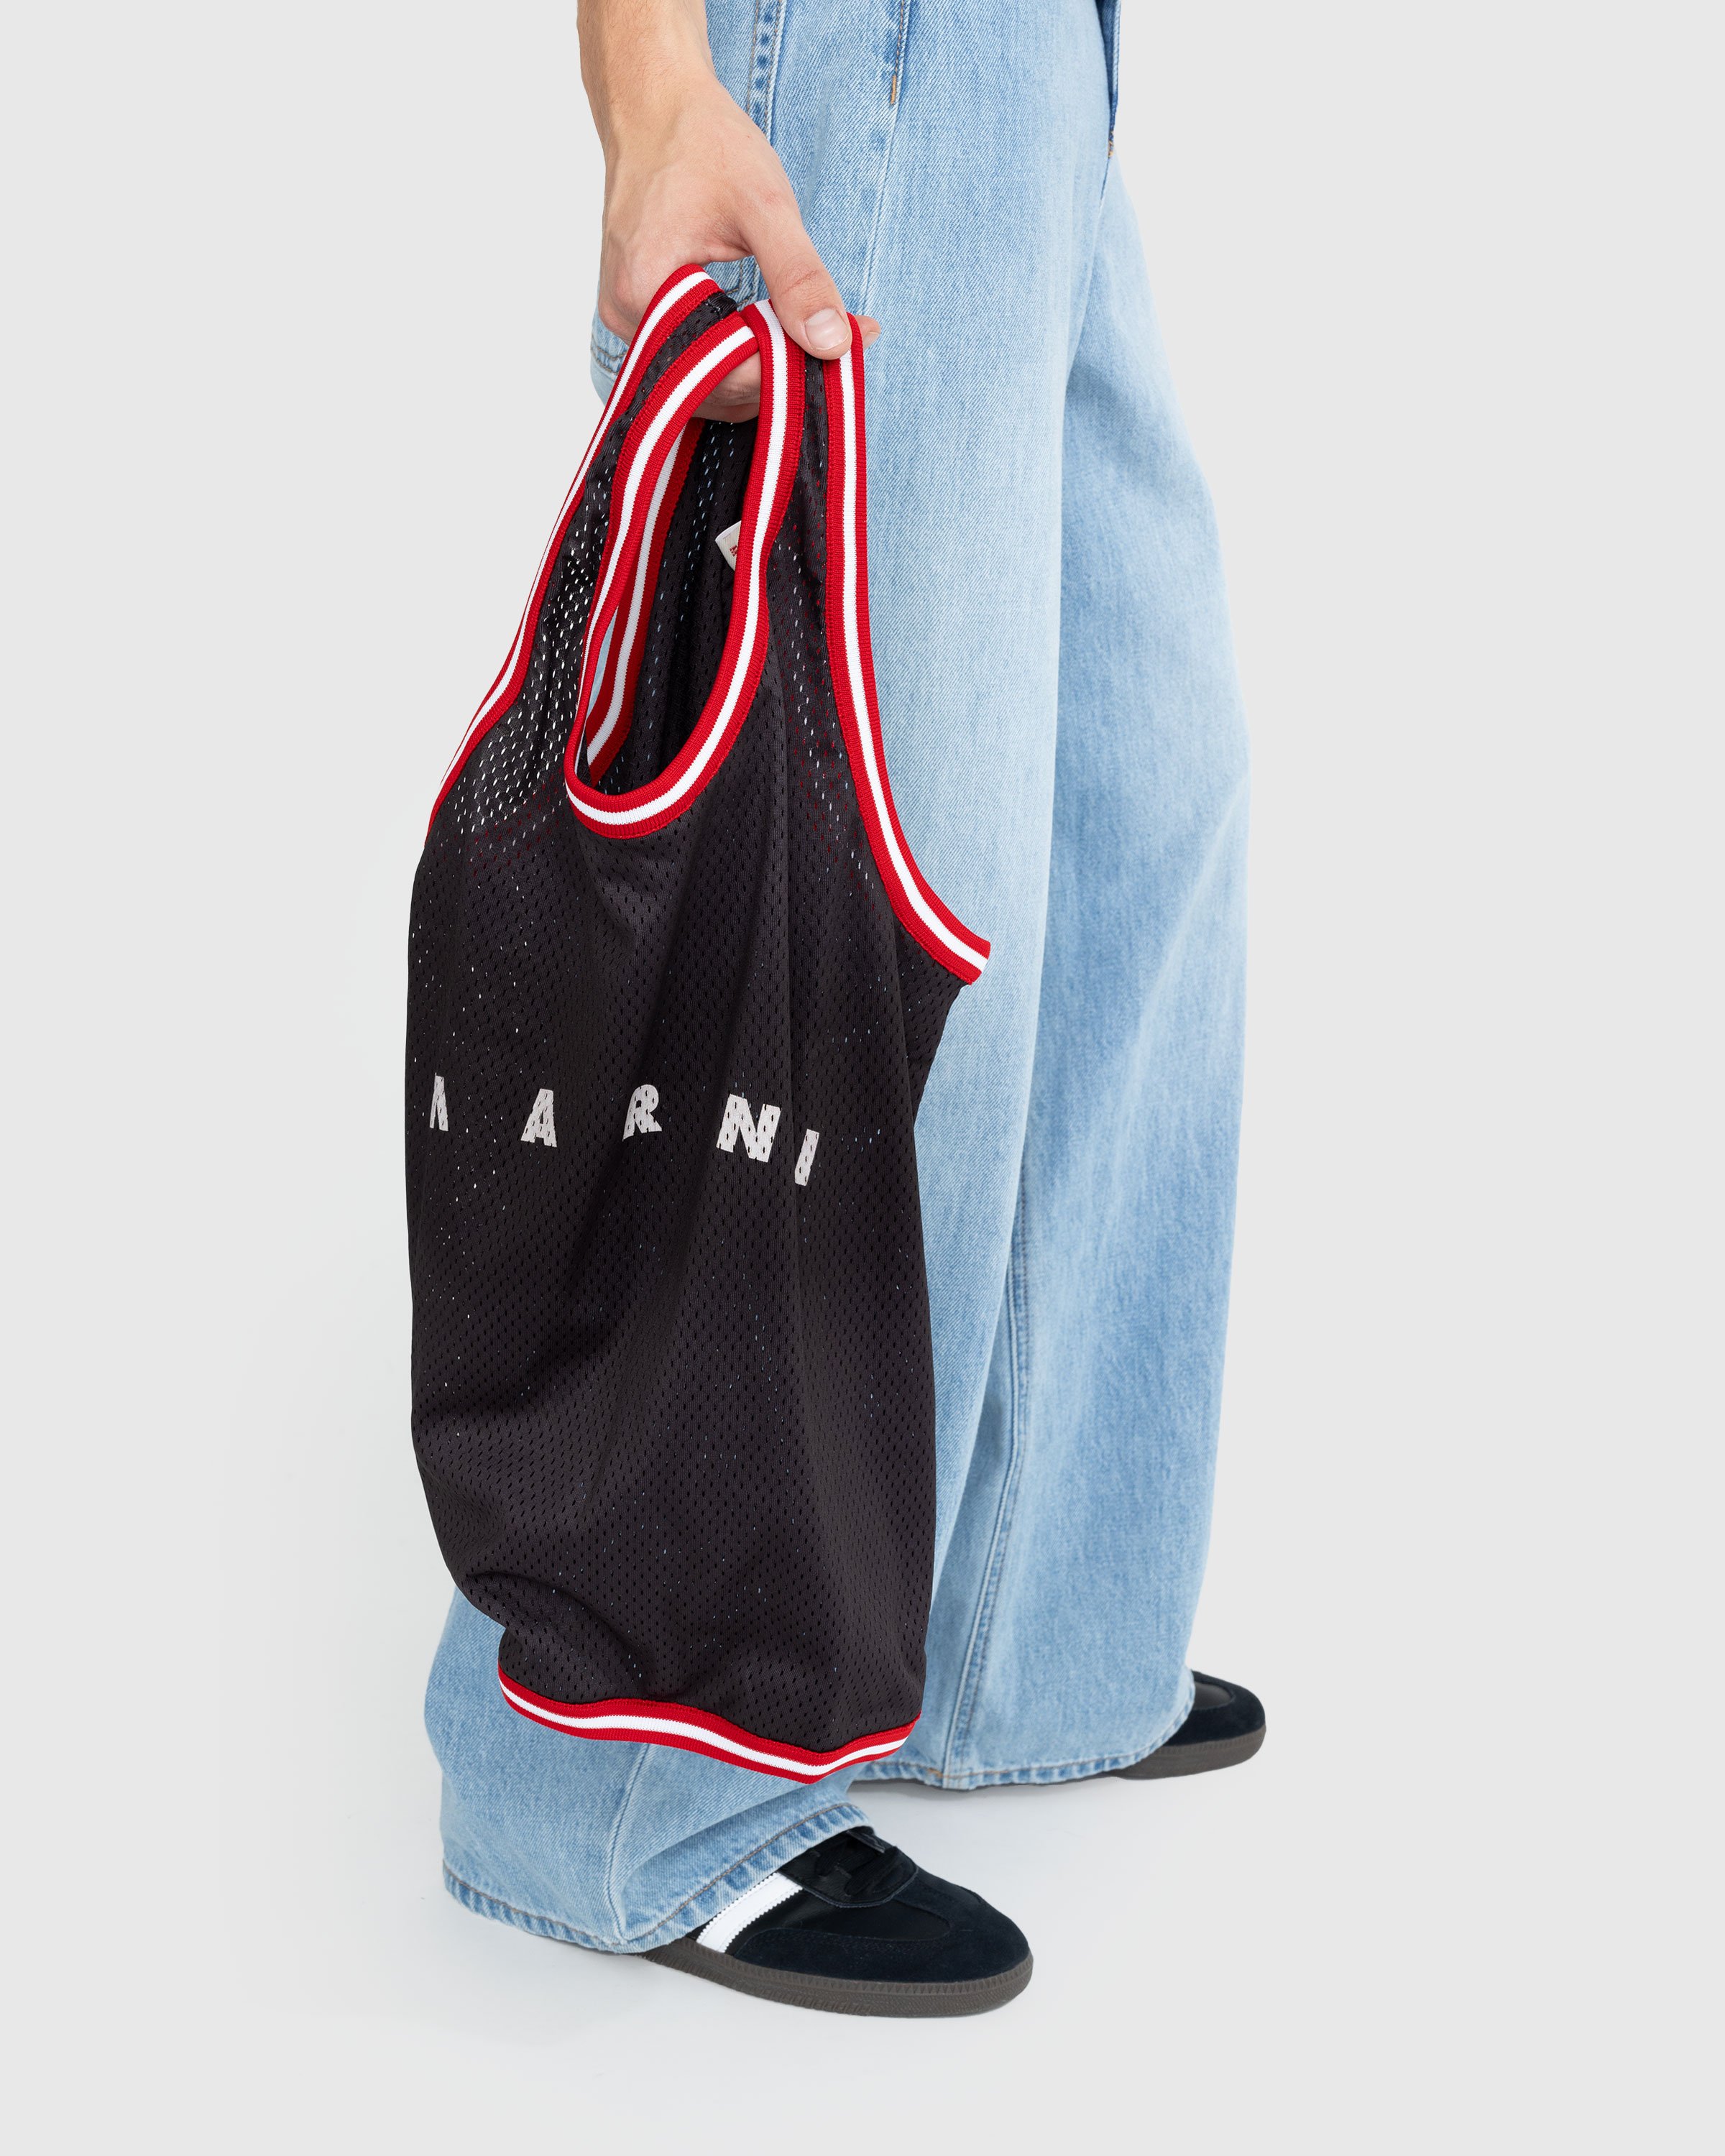 Marni - Basket Tank Top Shopping Bag Black - Accessories - Black - Image 4